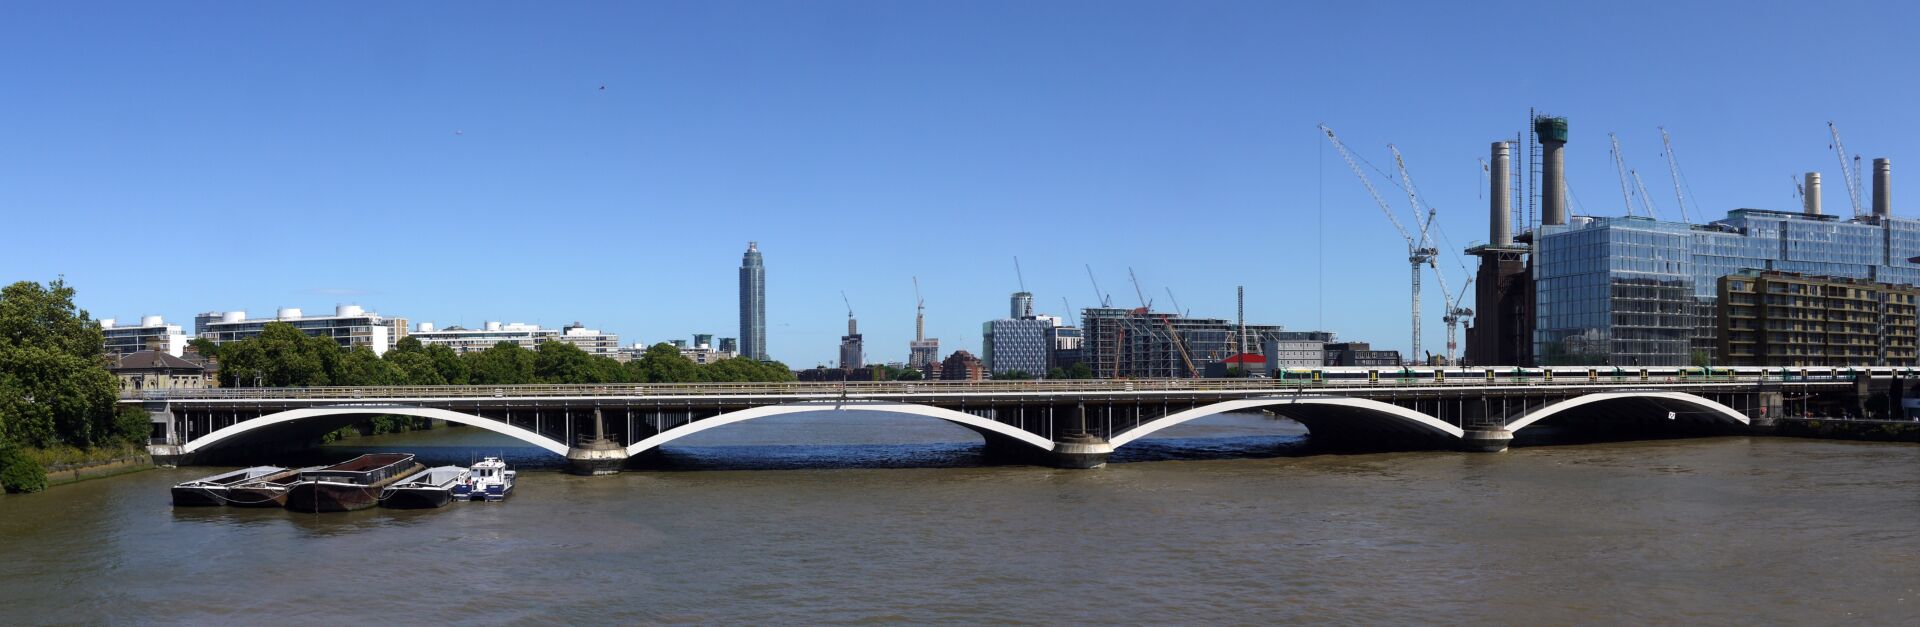 Grosvenor Bridge in London. Photo Credit: © Christopher Down via Wikimedia Commons.